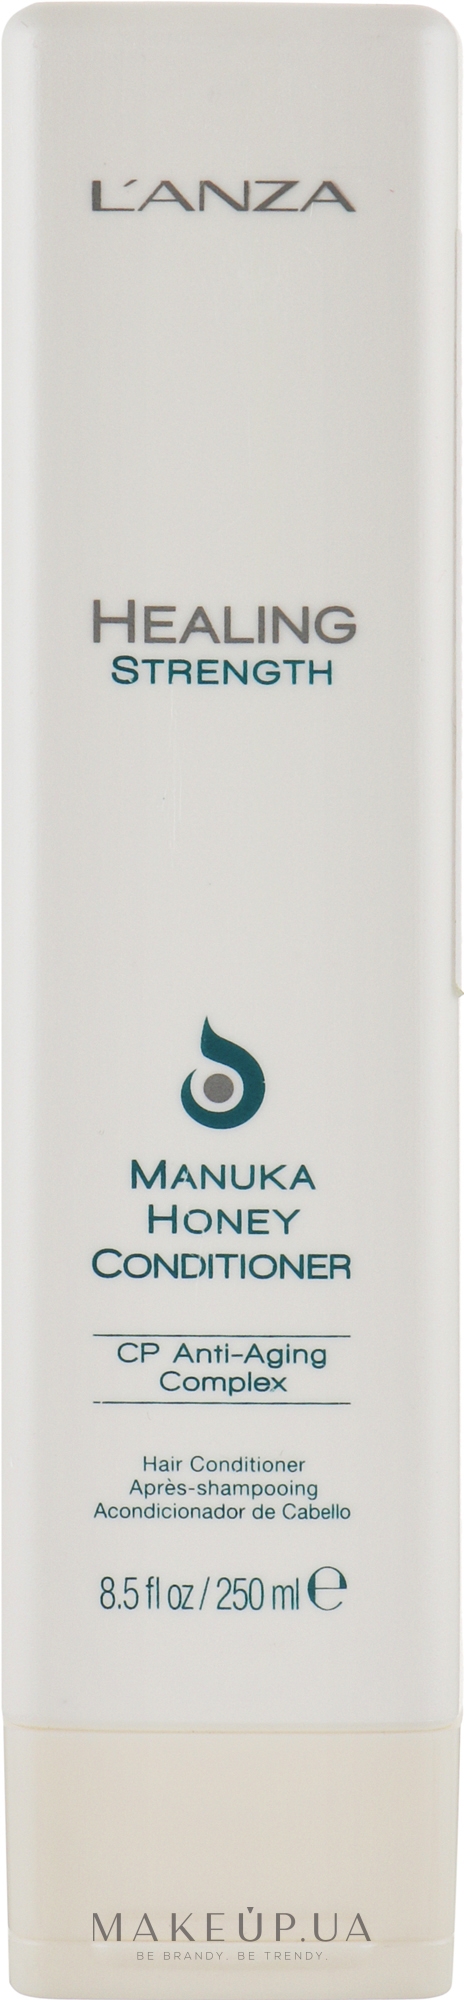 Зміцнювальний кондиціонер - L'anza Healing Strength Manuka Honey Conditioner — фото 250ml